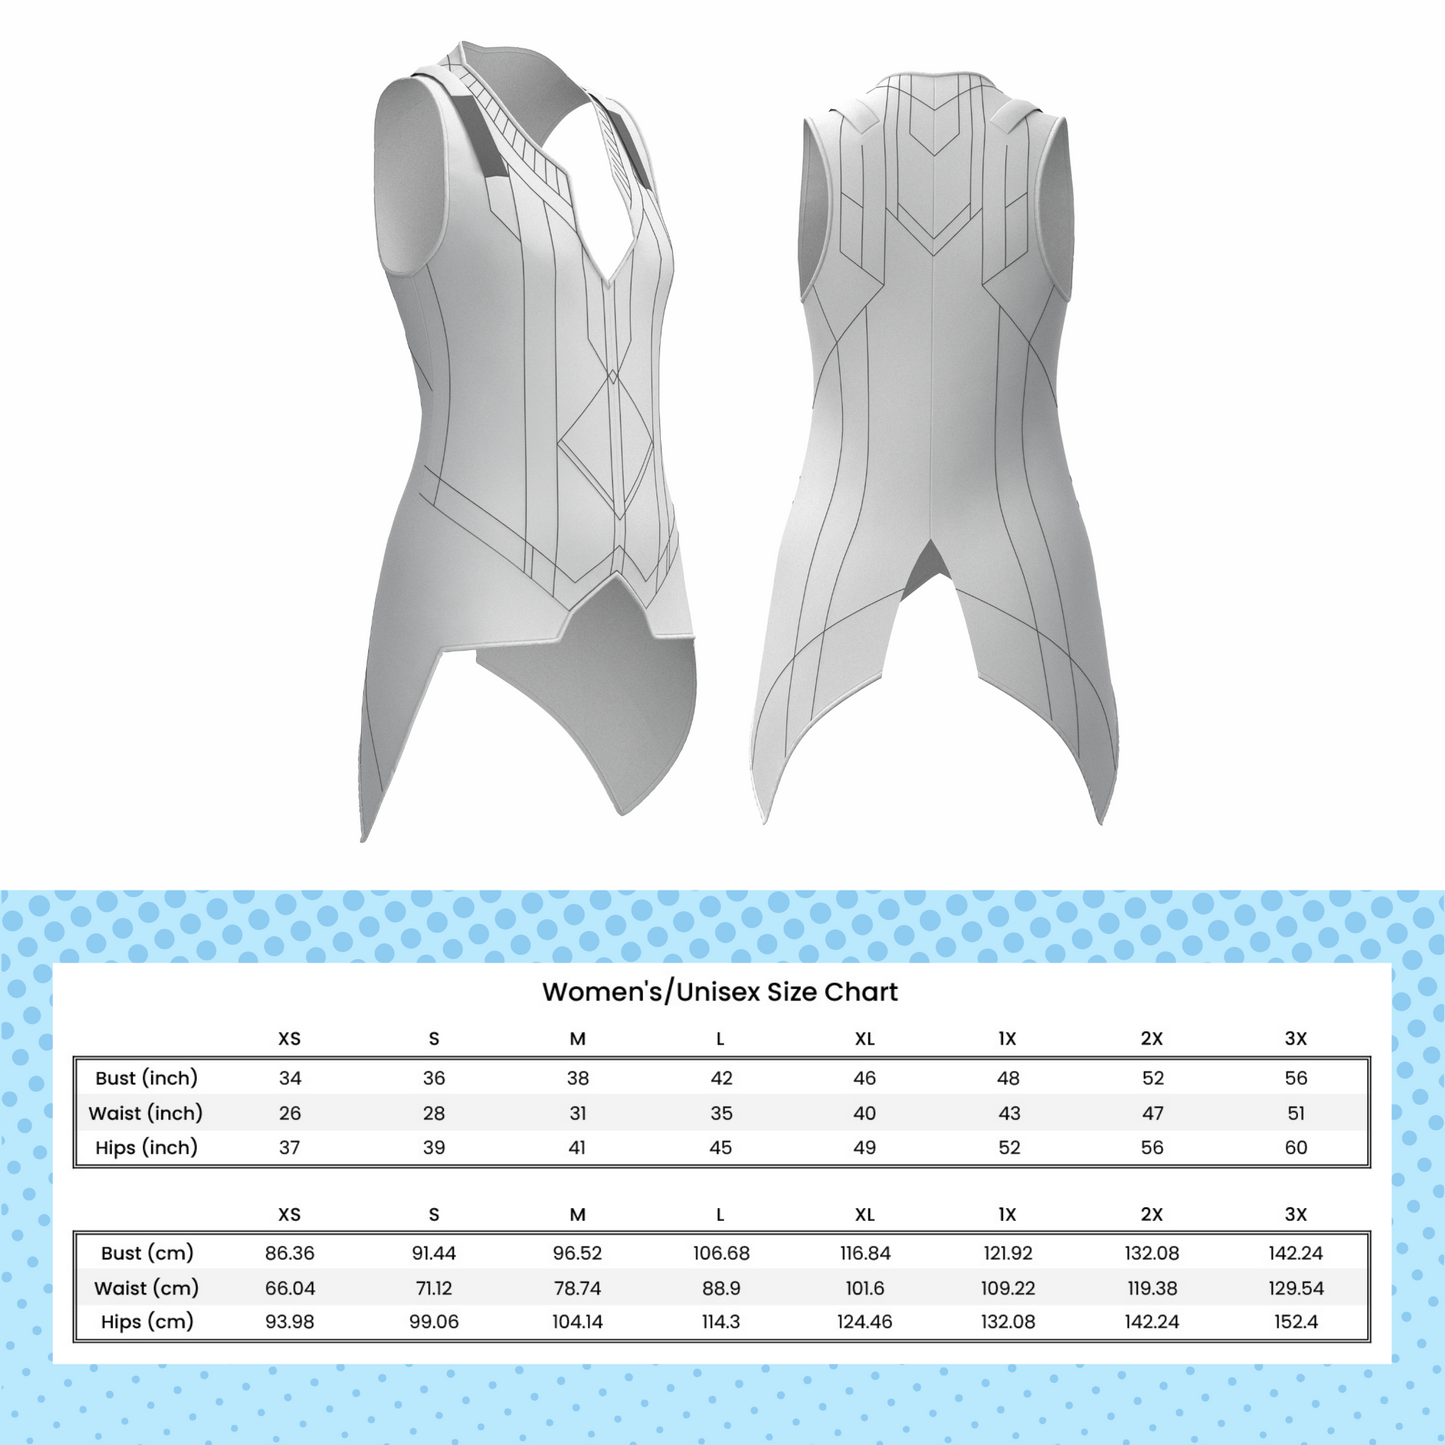 The Viktor Vest PDF Cosplay Pattern | Arcane Inspired Printable Costume